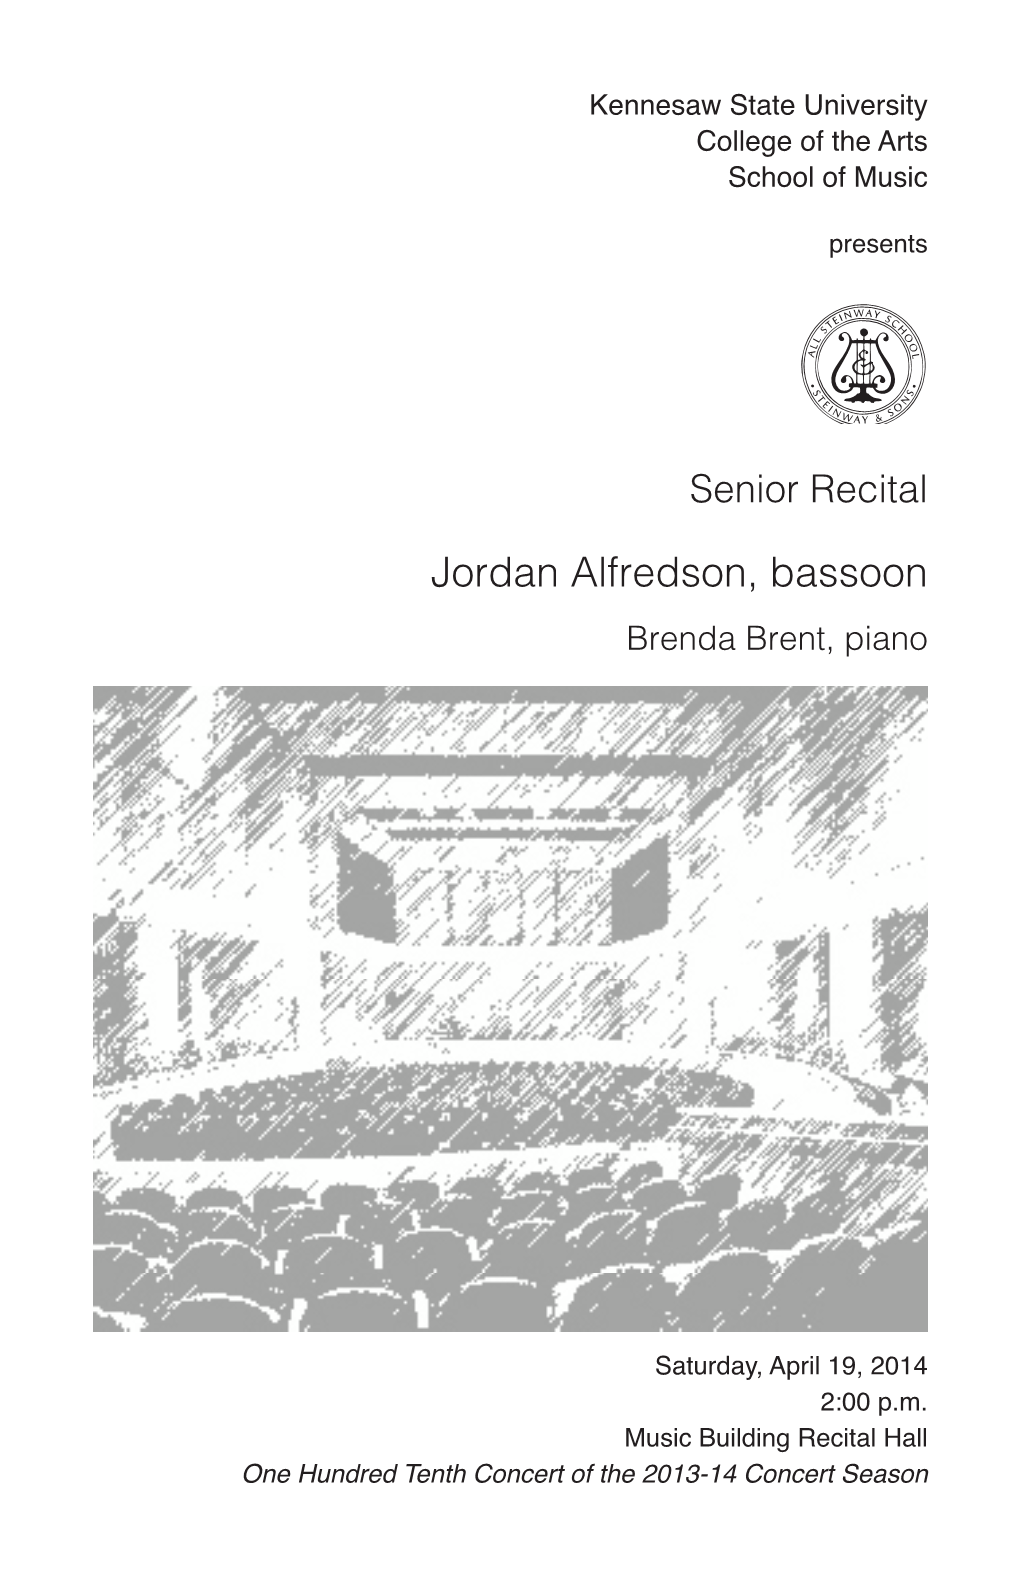 Jordan Alfredson, Bassoon Brenda Brent, Piano